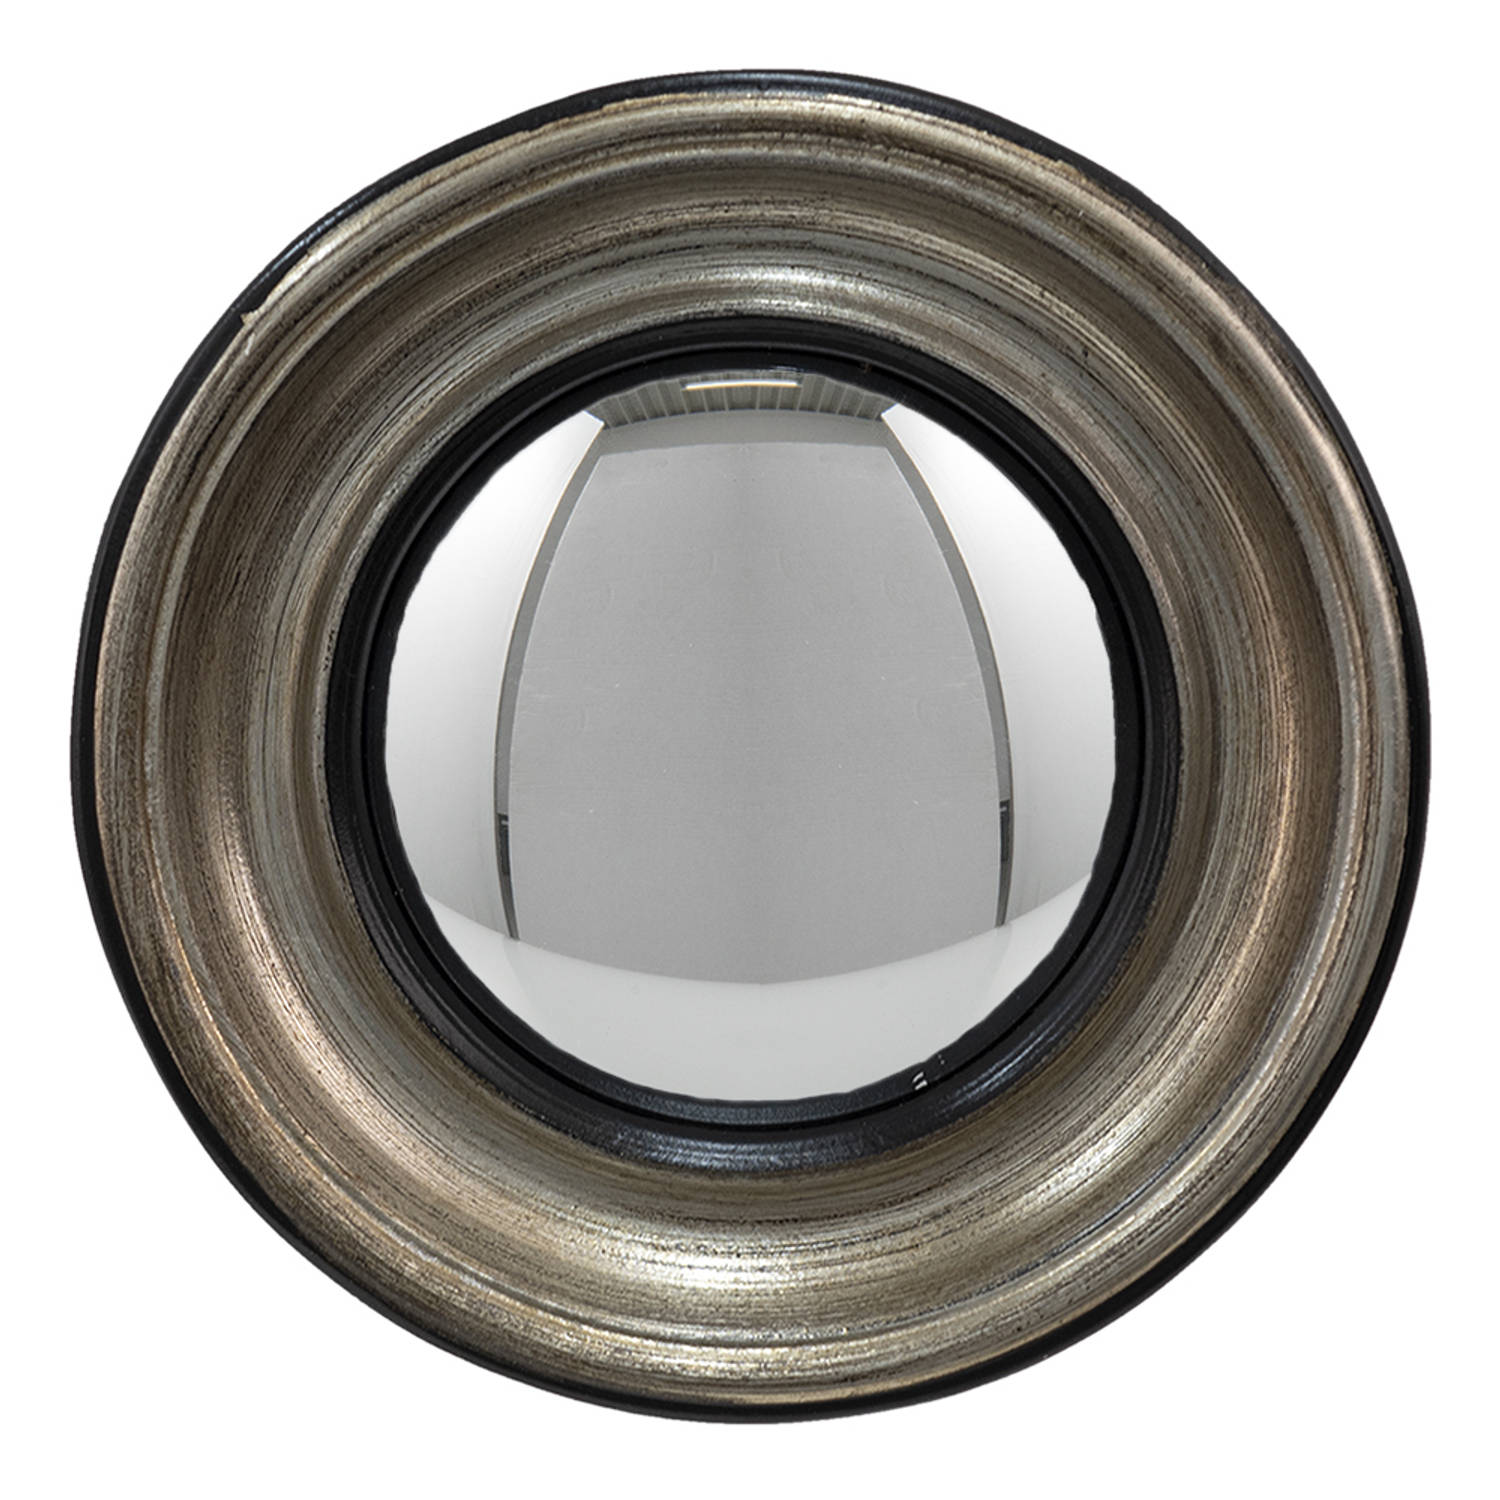 HAES DECO Bolle ronde Spiegel Zilverkleurig Ø 23x4 cm Kunststof-Glas Wandspiegel, Spiegel rond, Conv